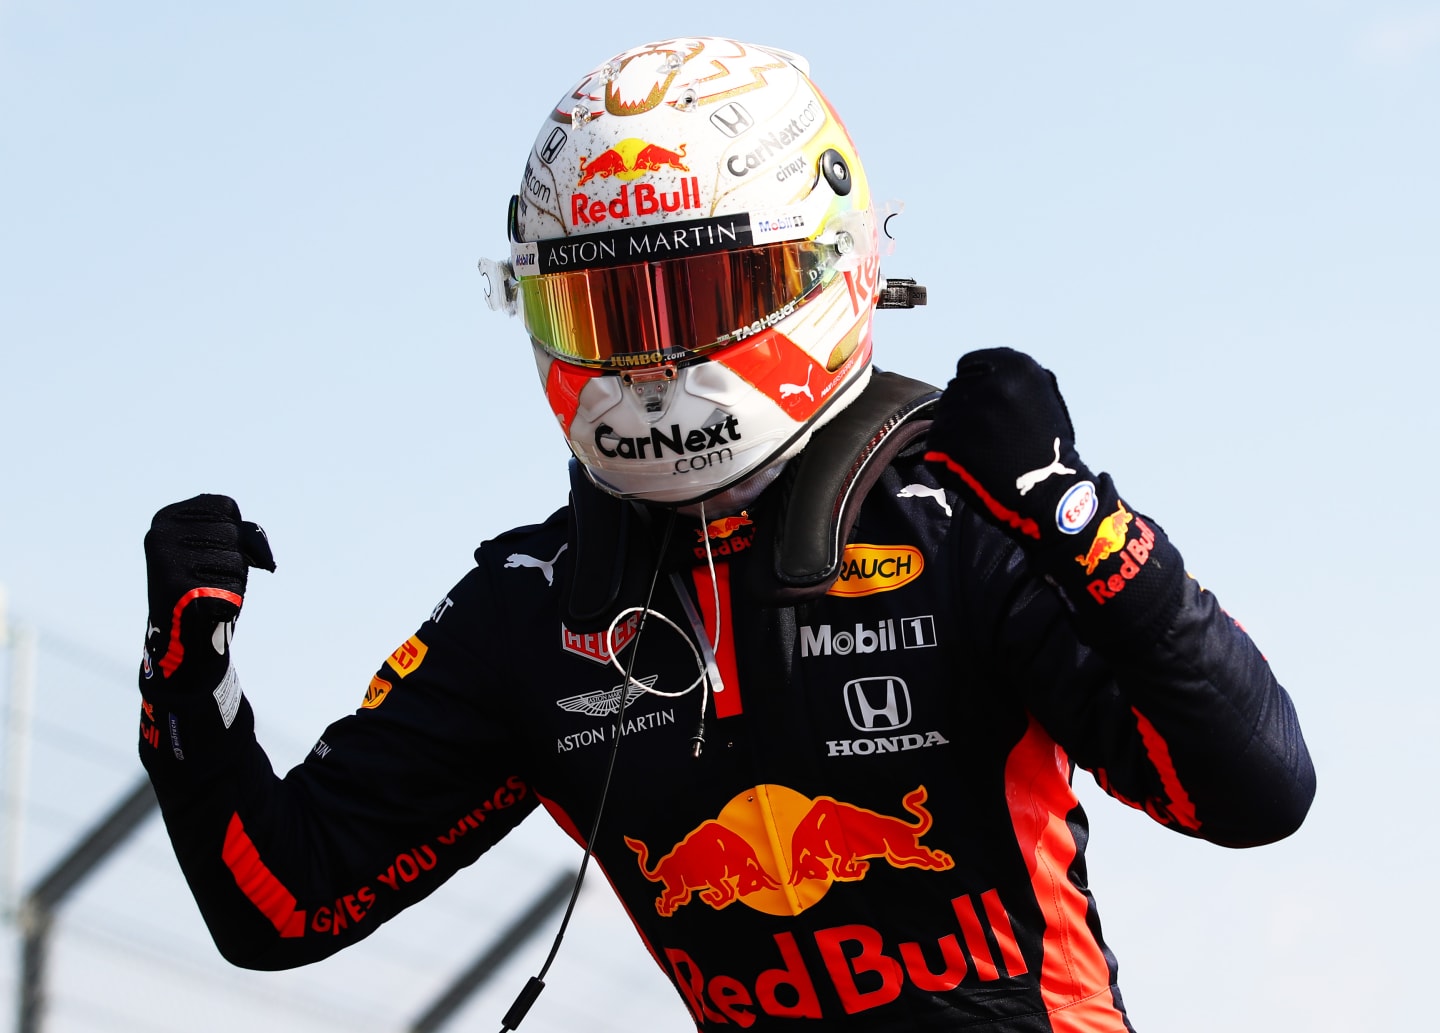 NORTHAMPTON, ENGLAND - AUGUST 09: Race winner Max Verstappen of Netherlands and Red Bull Racing